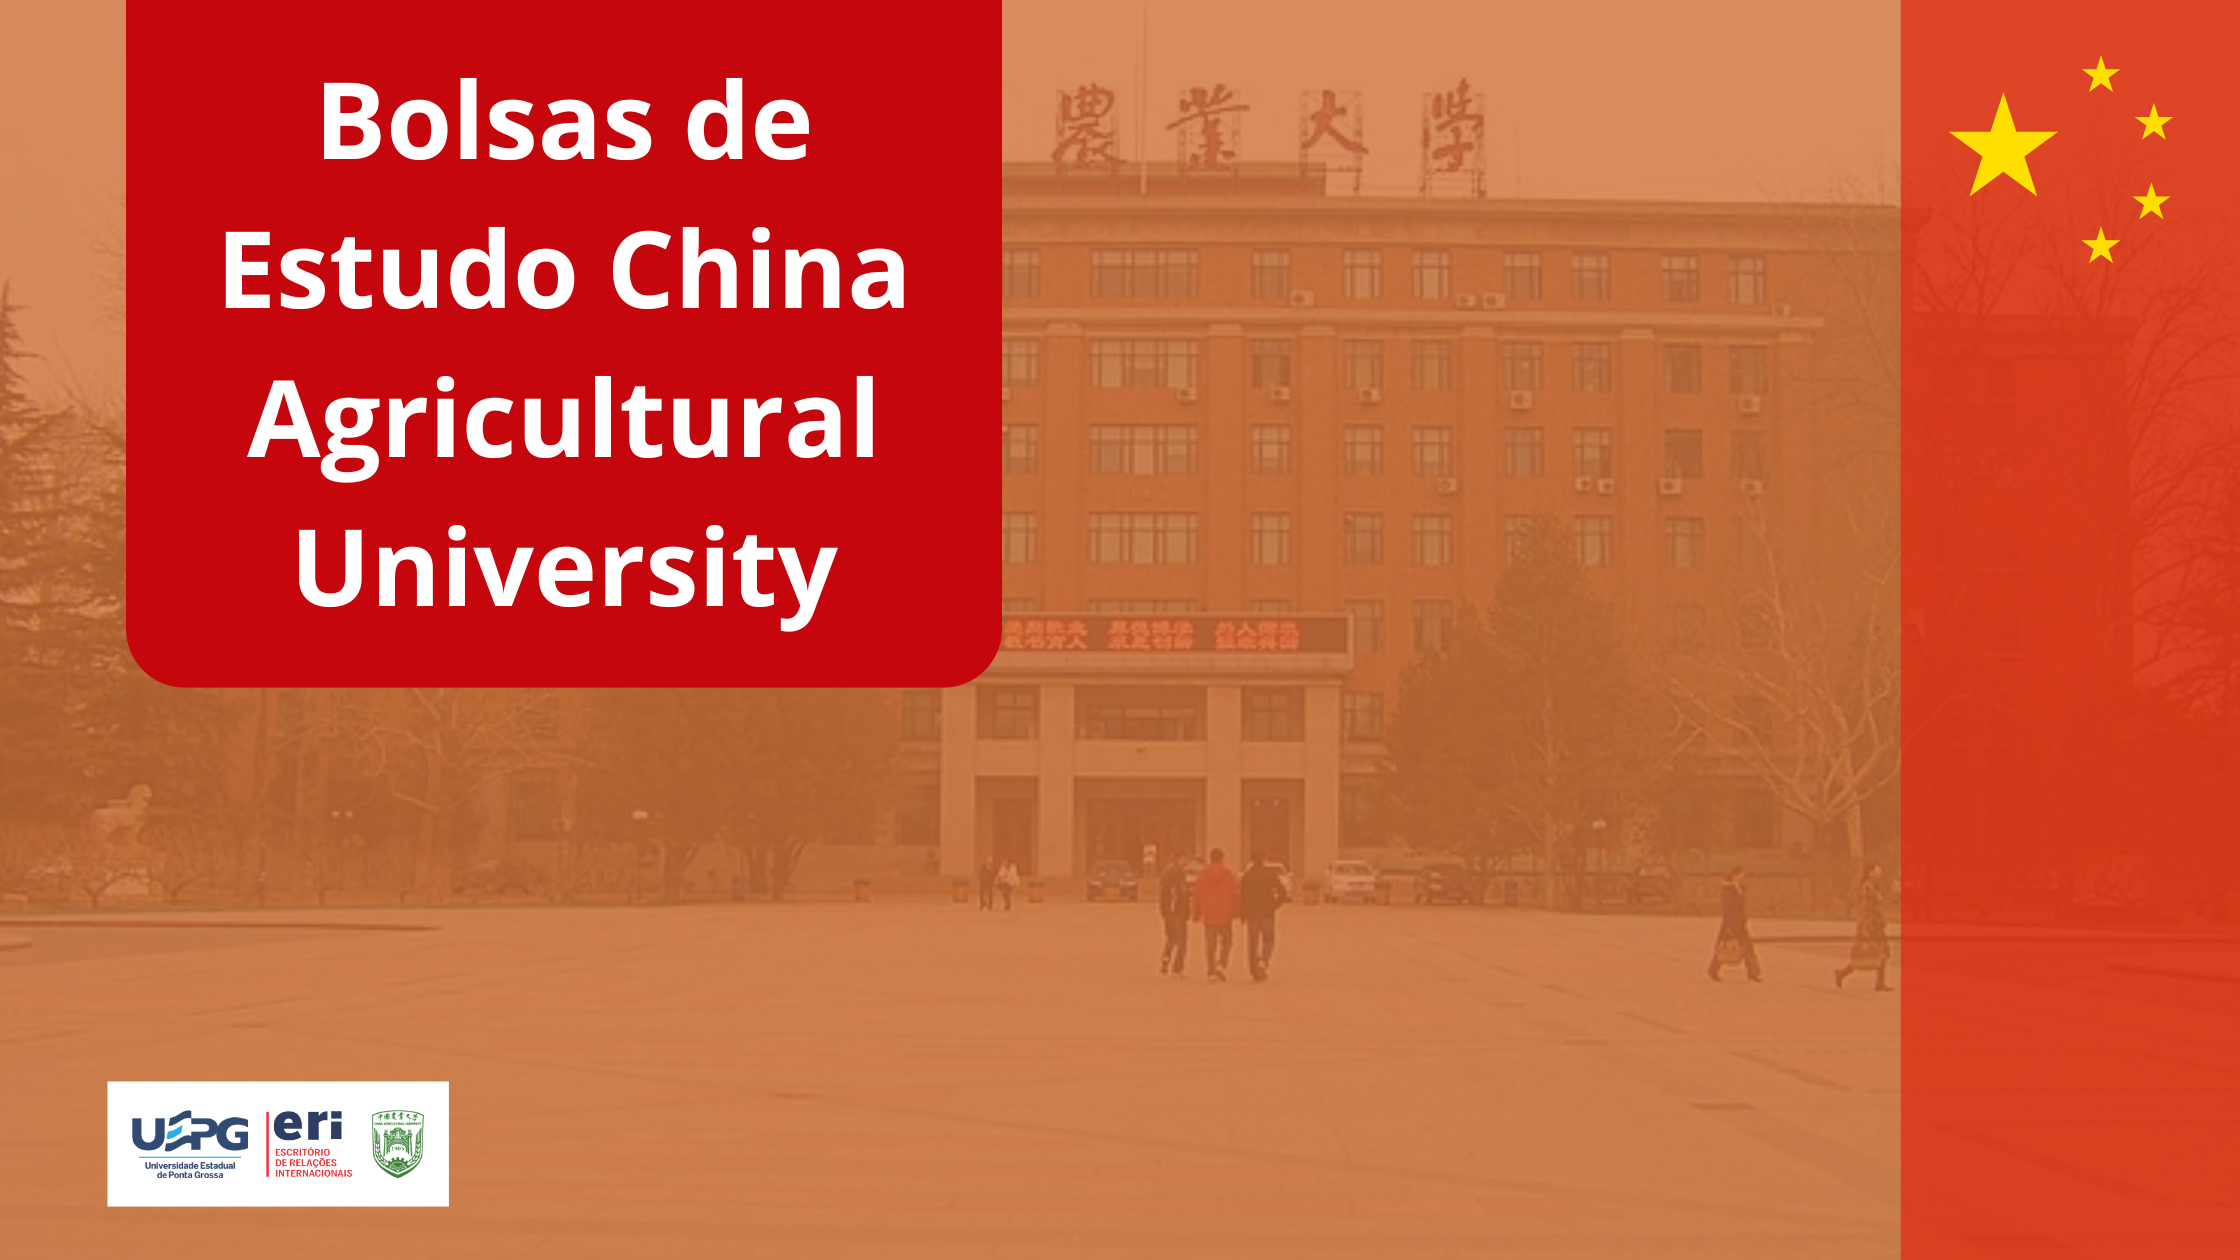 Bolsas de Estudo China Agricultural University